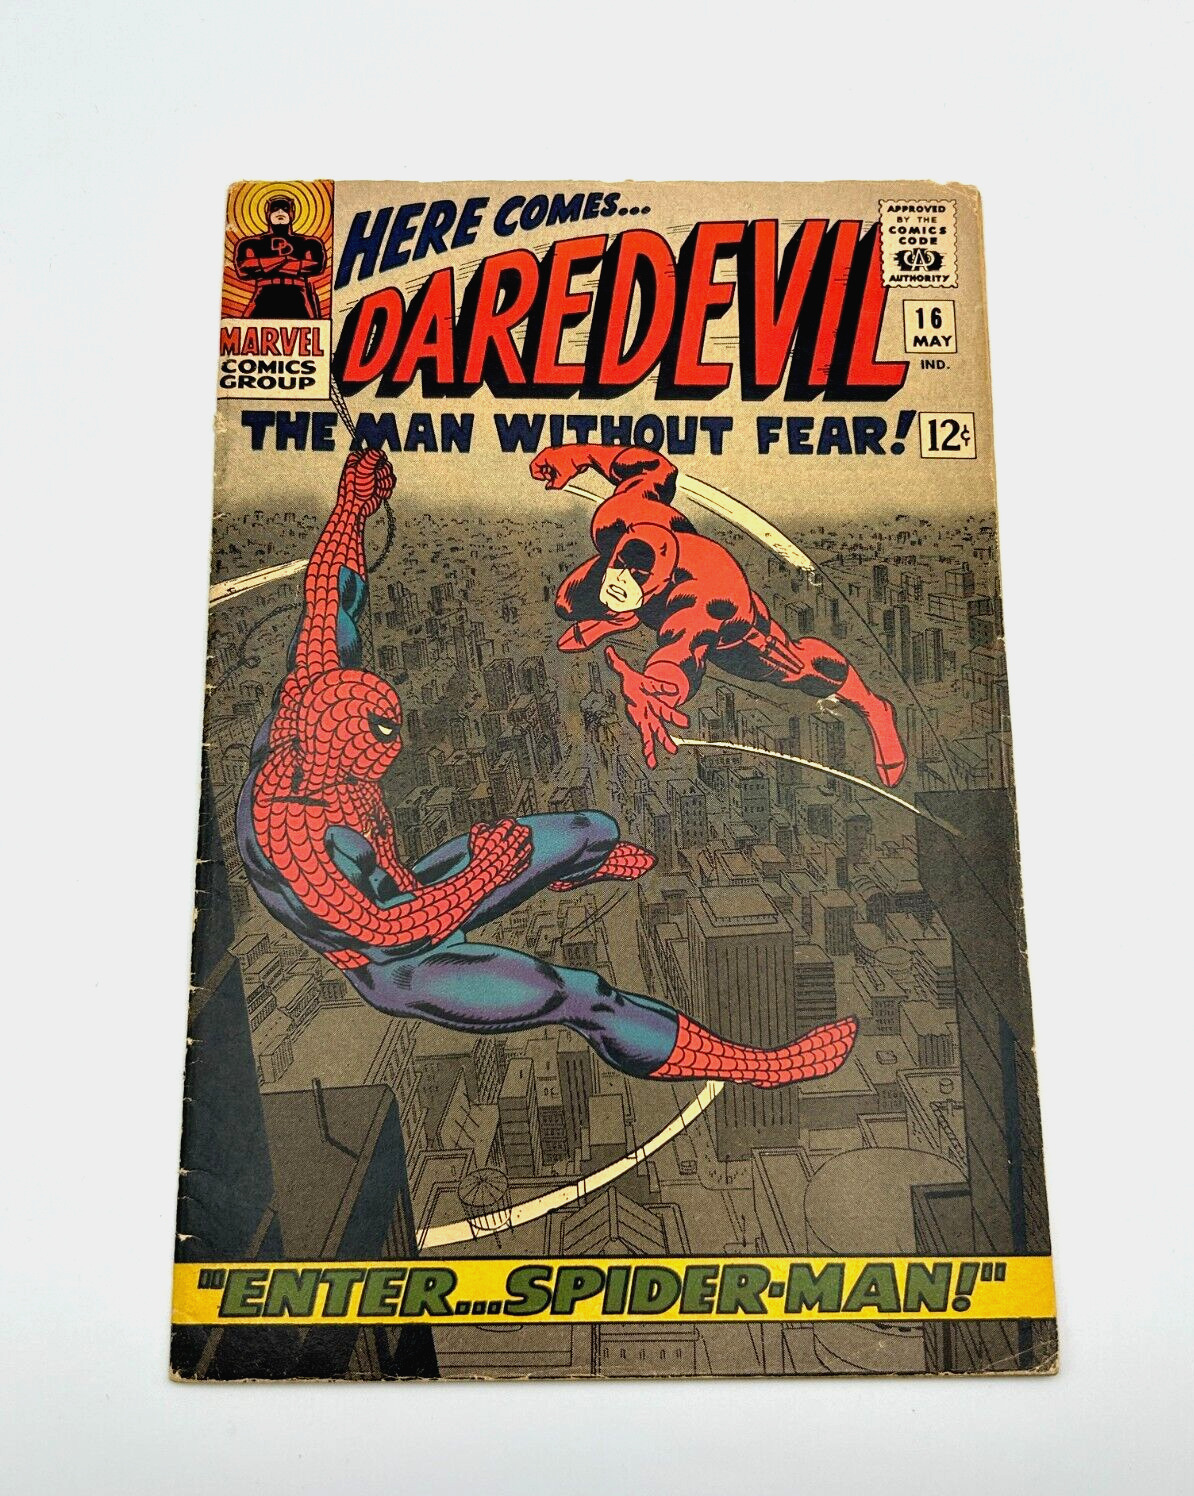 Daredevil 16 1966 Amazing Spider-Man Solid Copy VG+